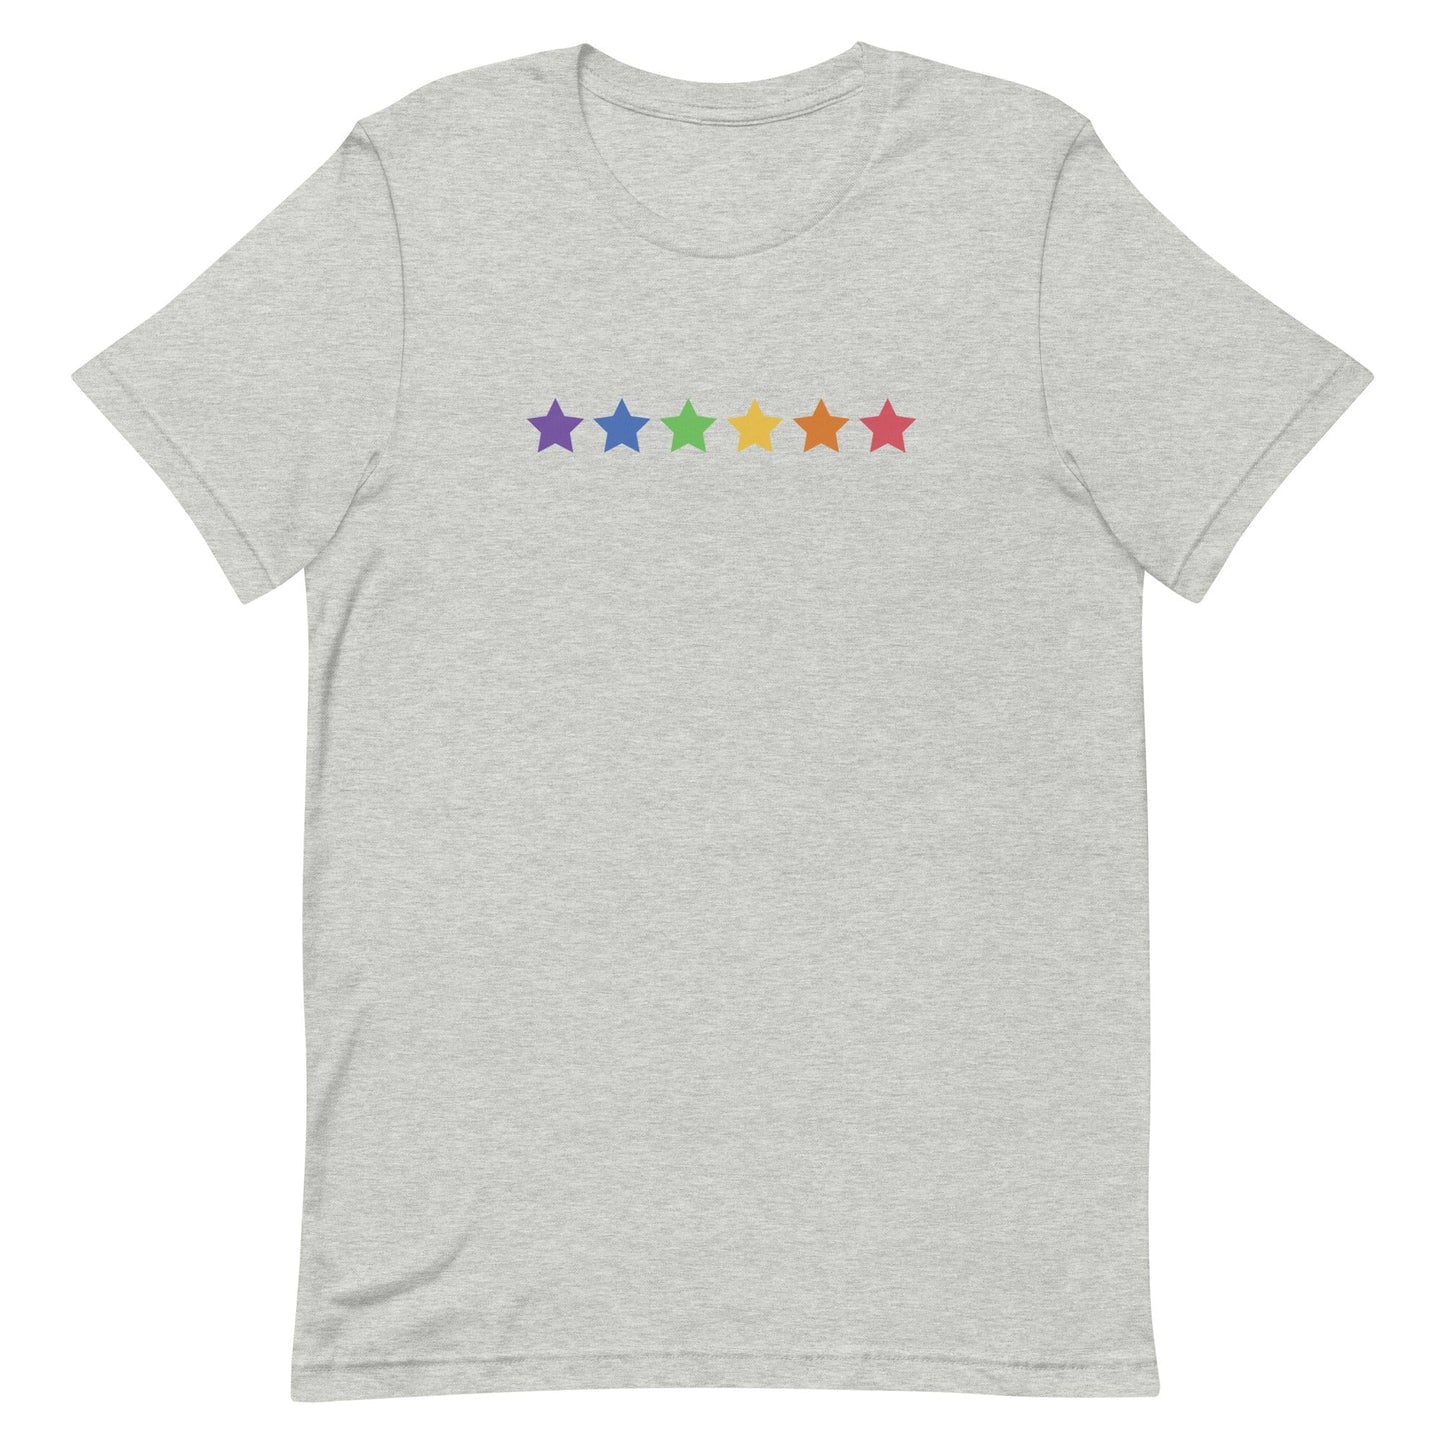 front-grey-genderless-stars-pride-t-shirt-by-feminist-define